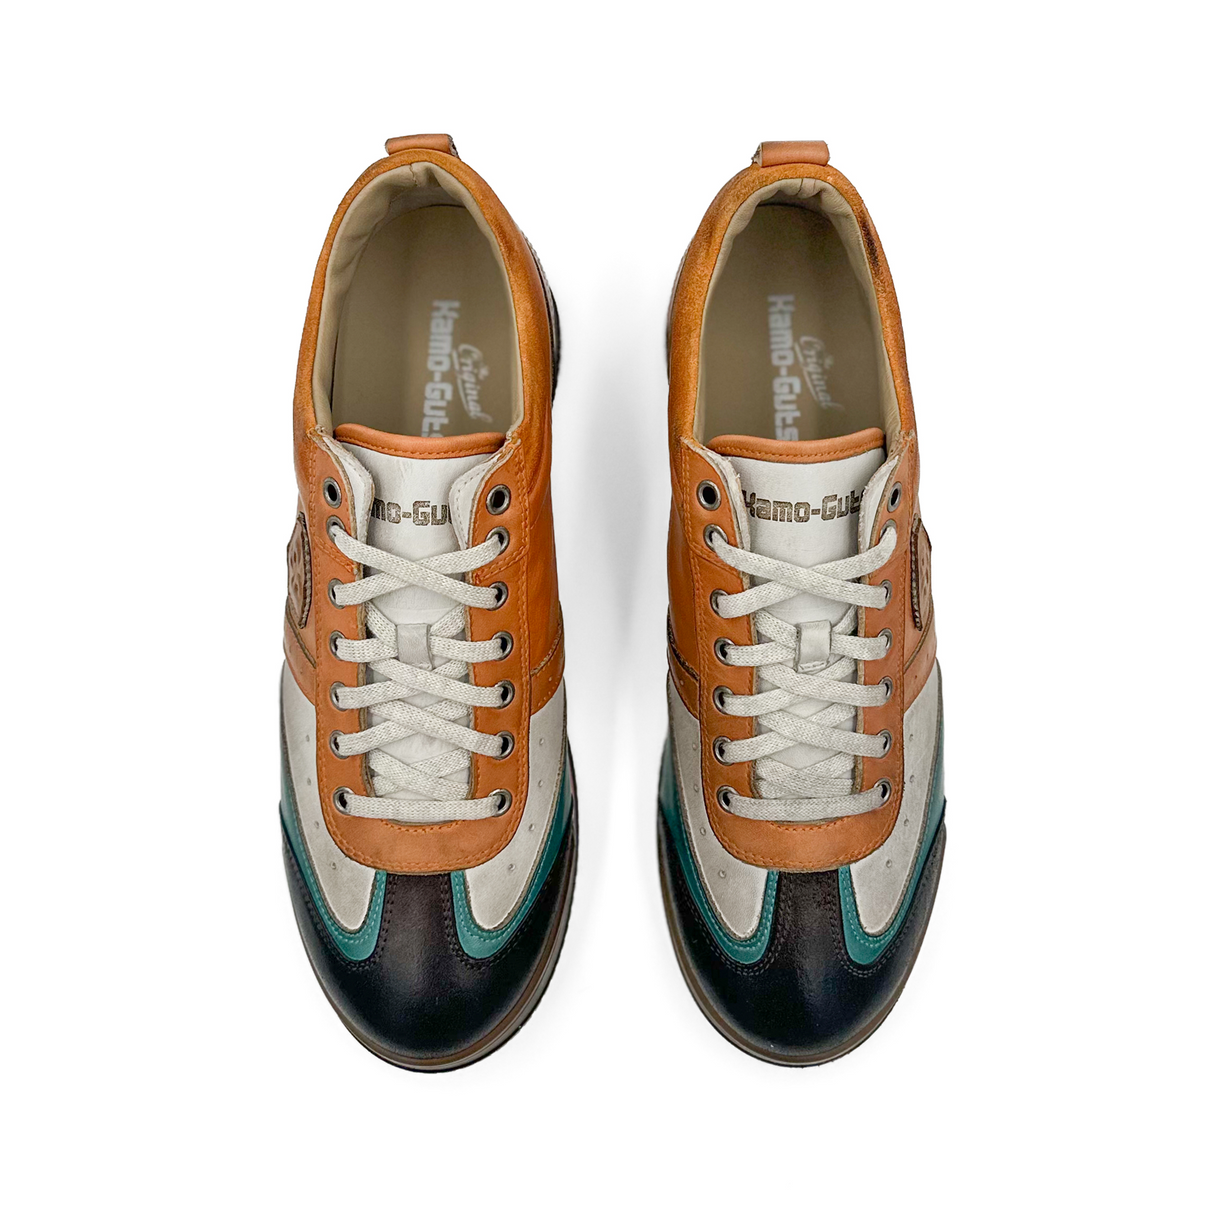 Kamo-Gutsu SCUDO 005 Sneaker (Men) - Siena Combi Athletic - Casual - Lace Up - The Heel Shoe Fitters